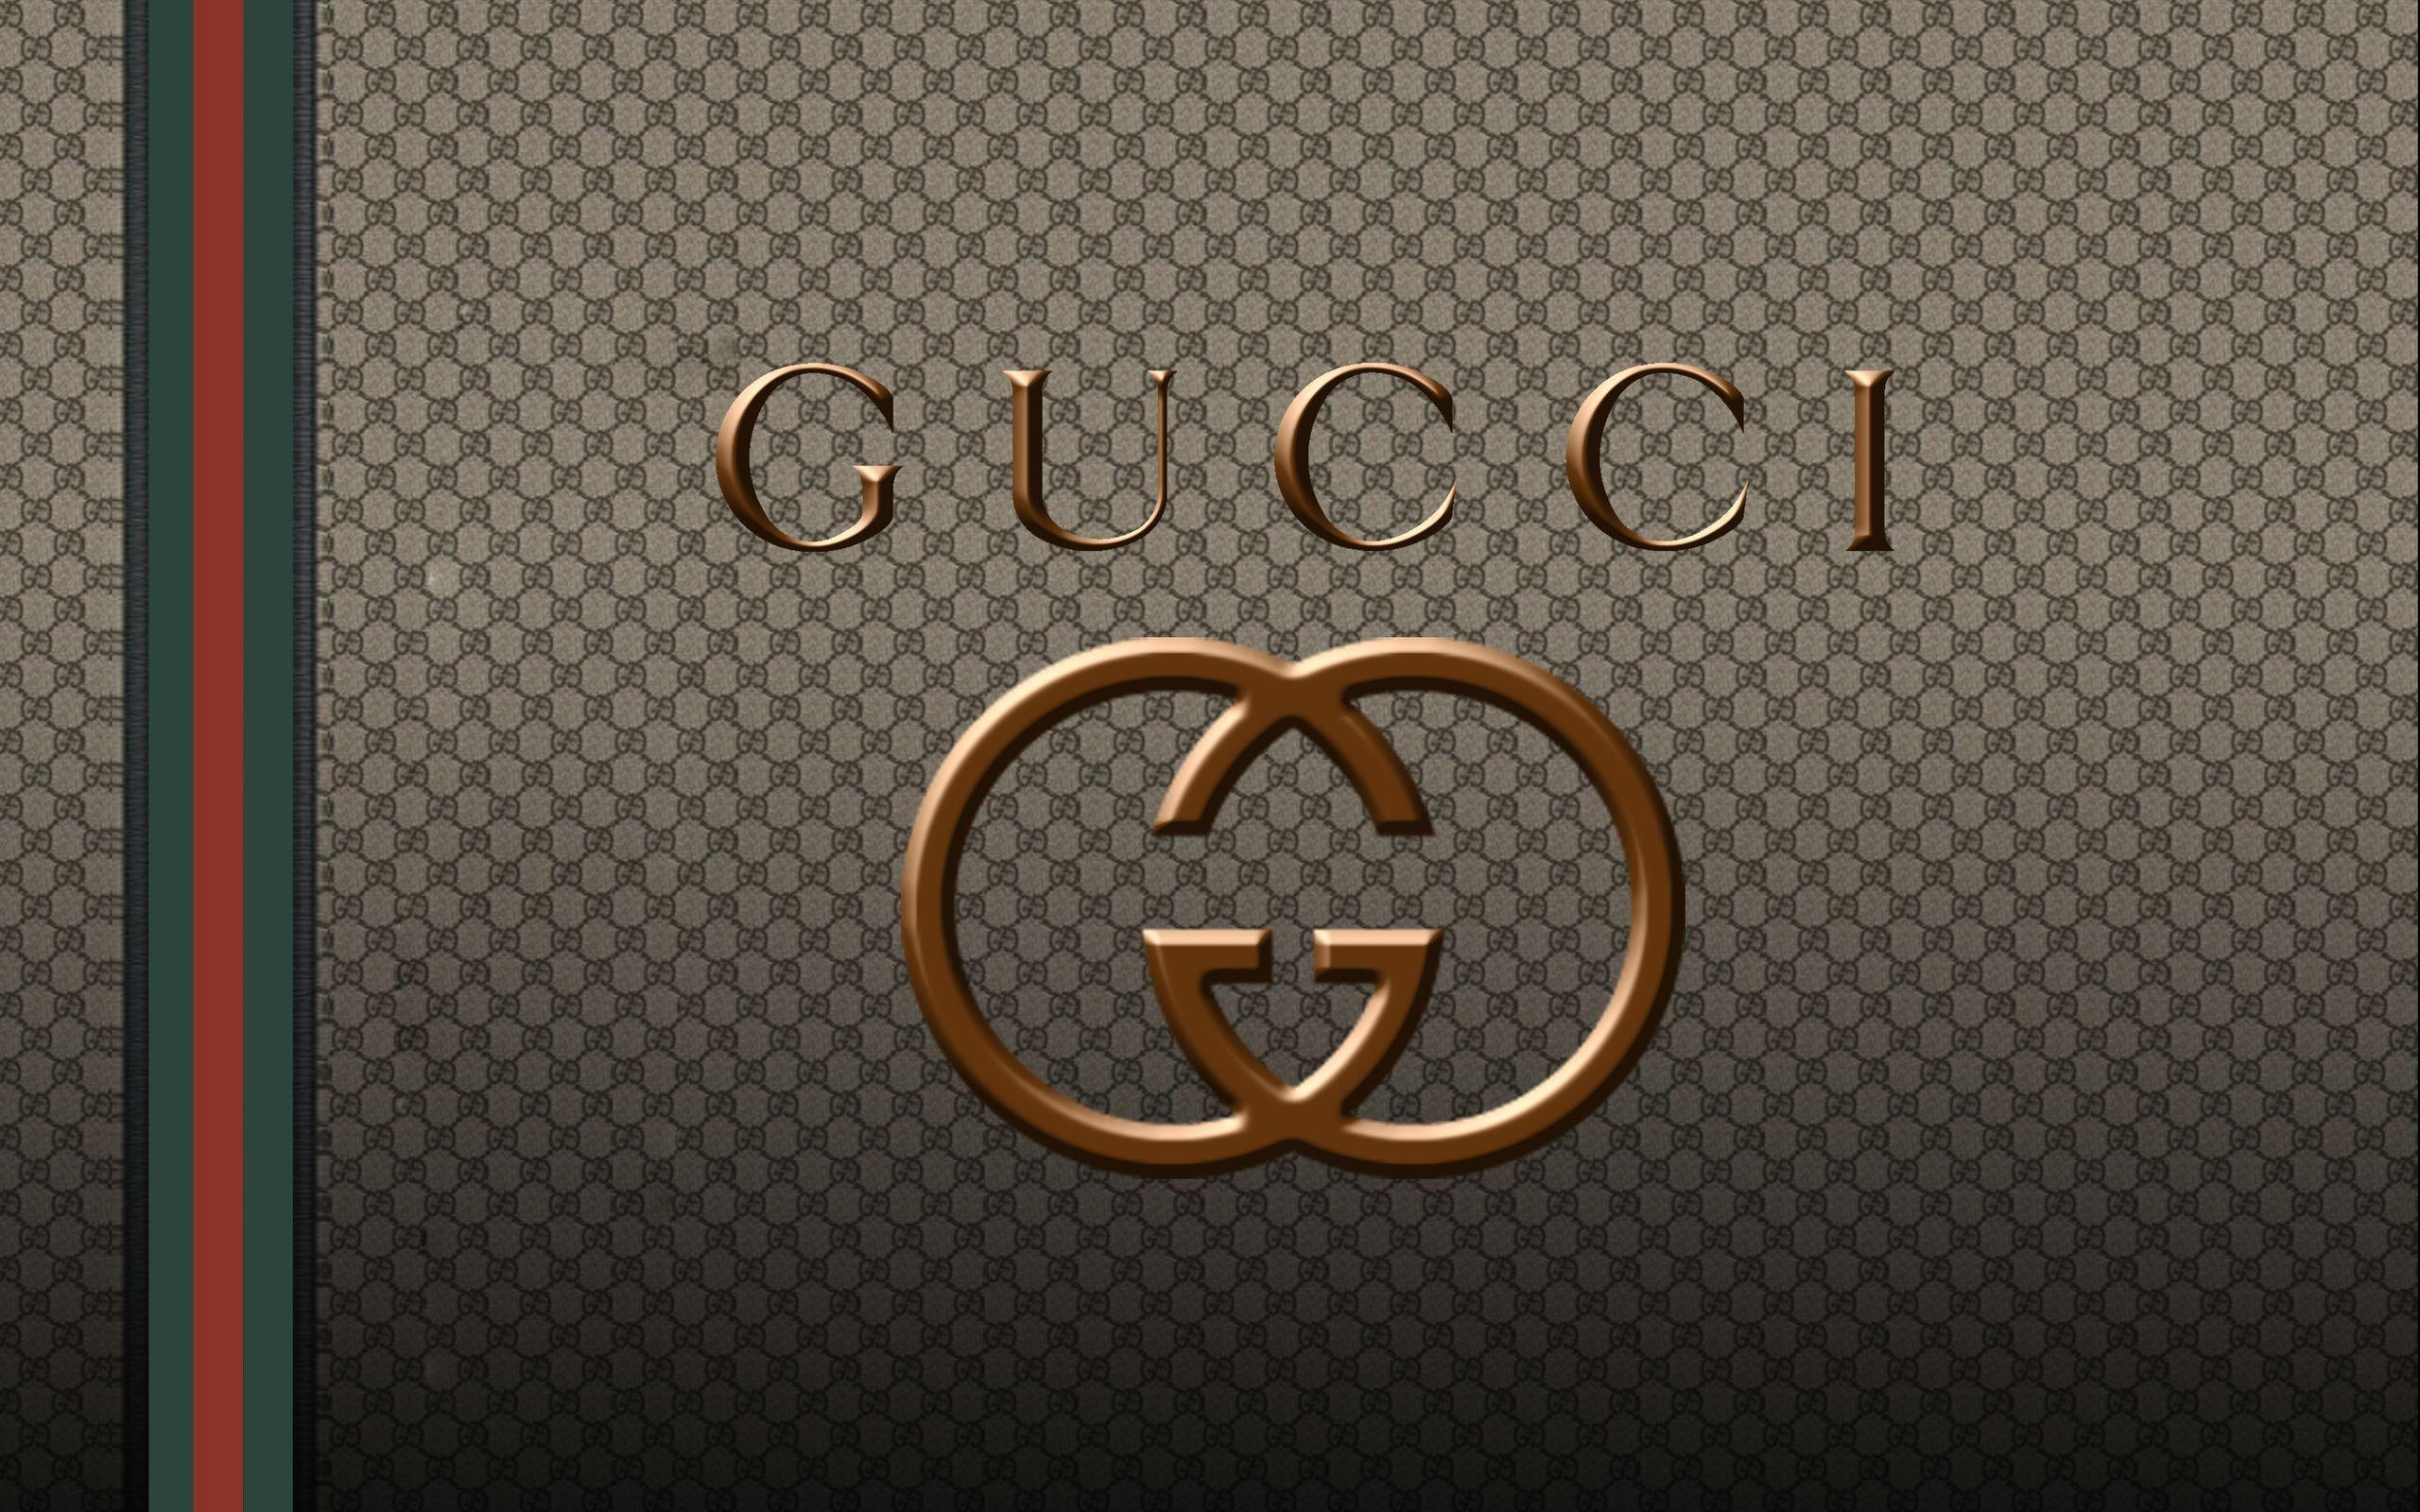 Gucci Wallpaper HD [#] 08